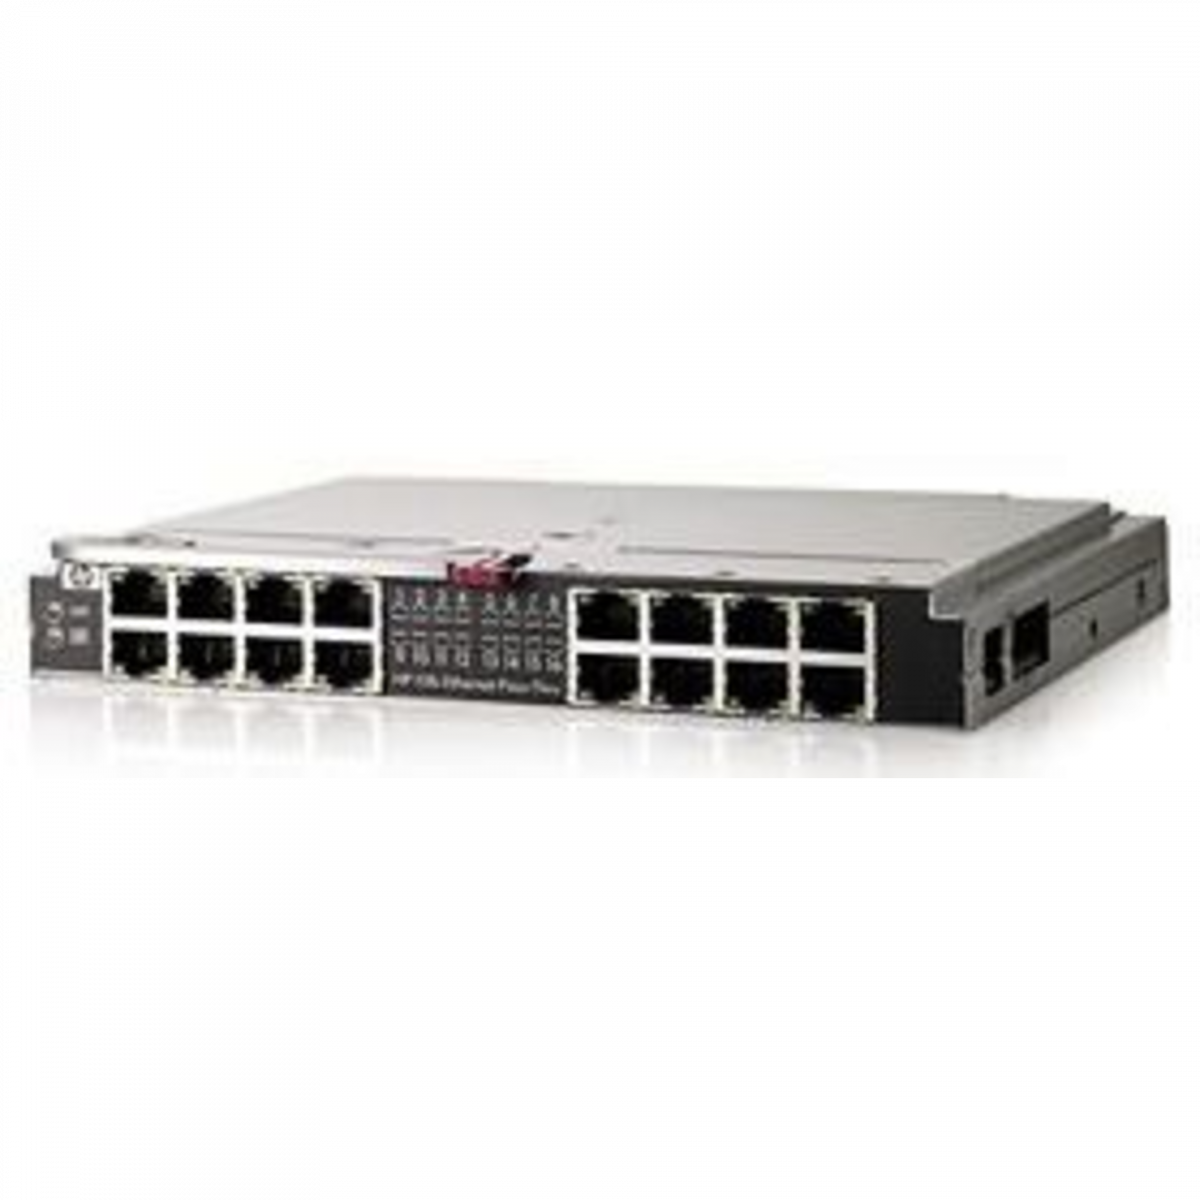 Модуль транзита Ethernet для HP блейд систем c7000, 16х 100/1000Base-T